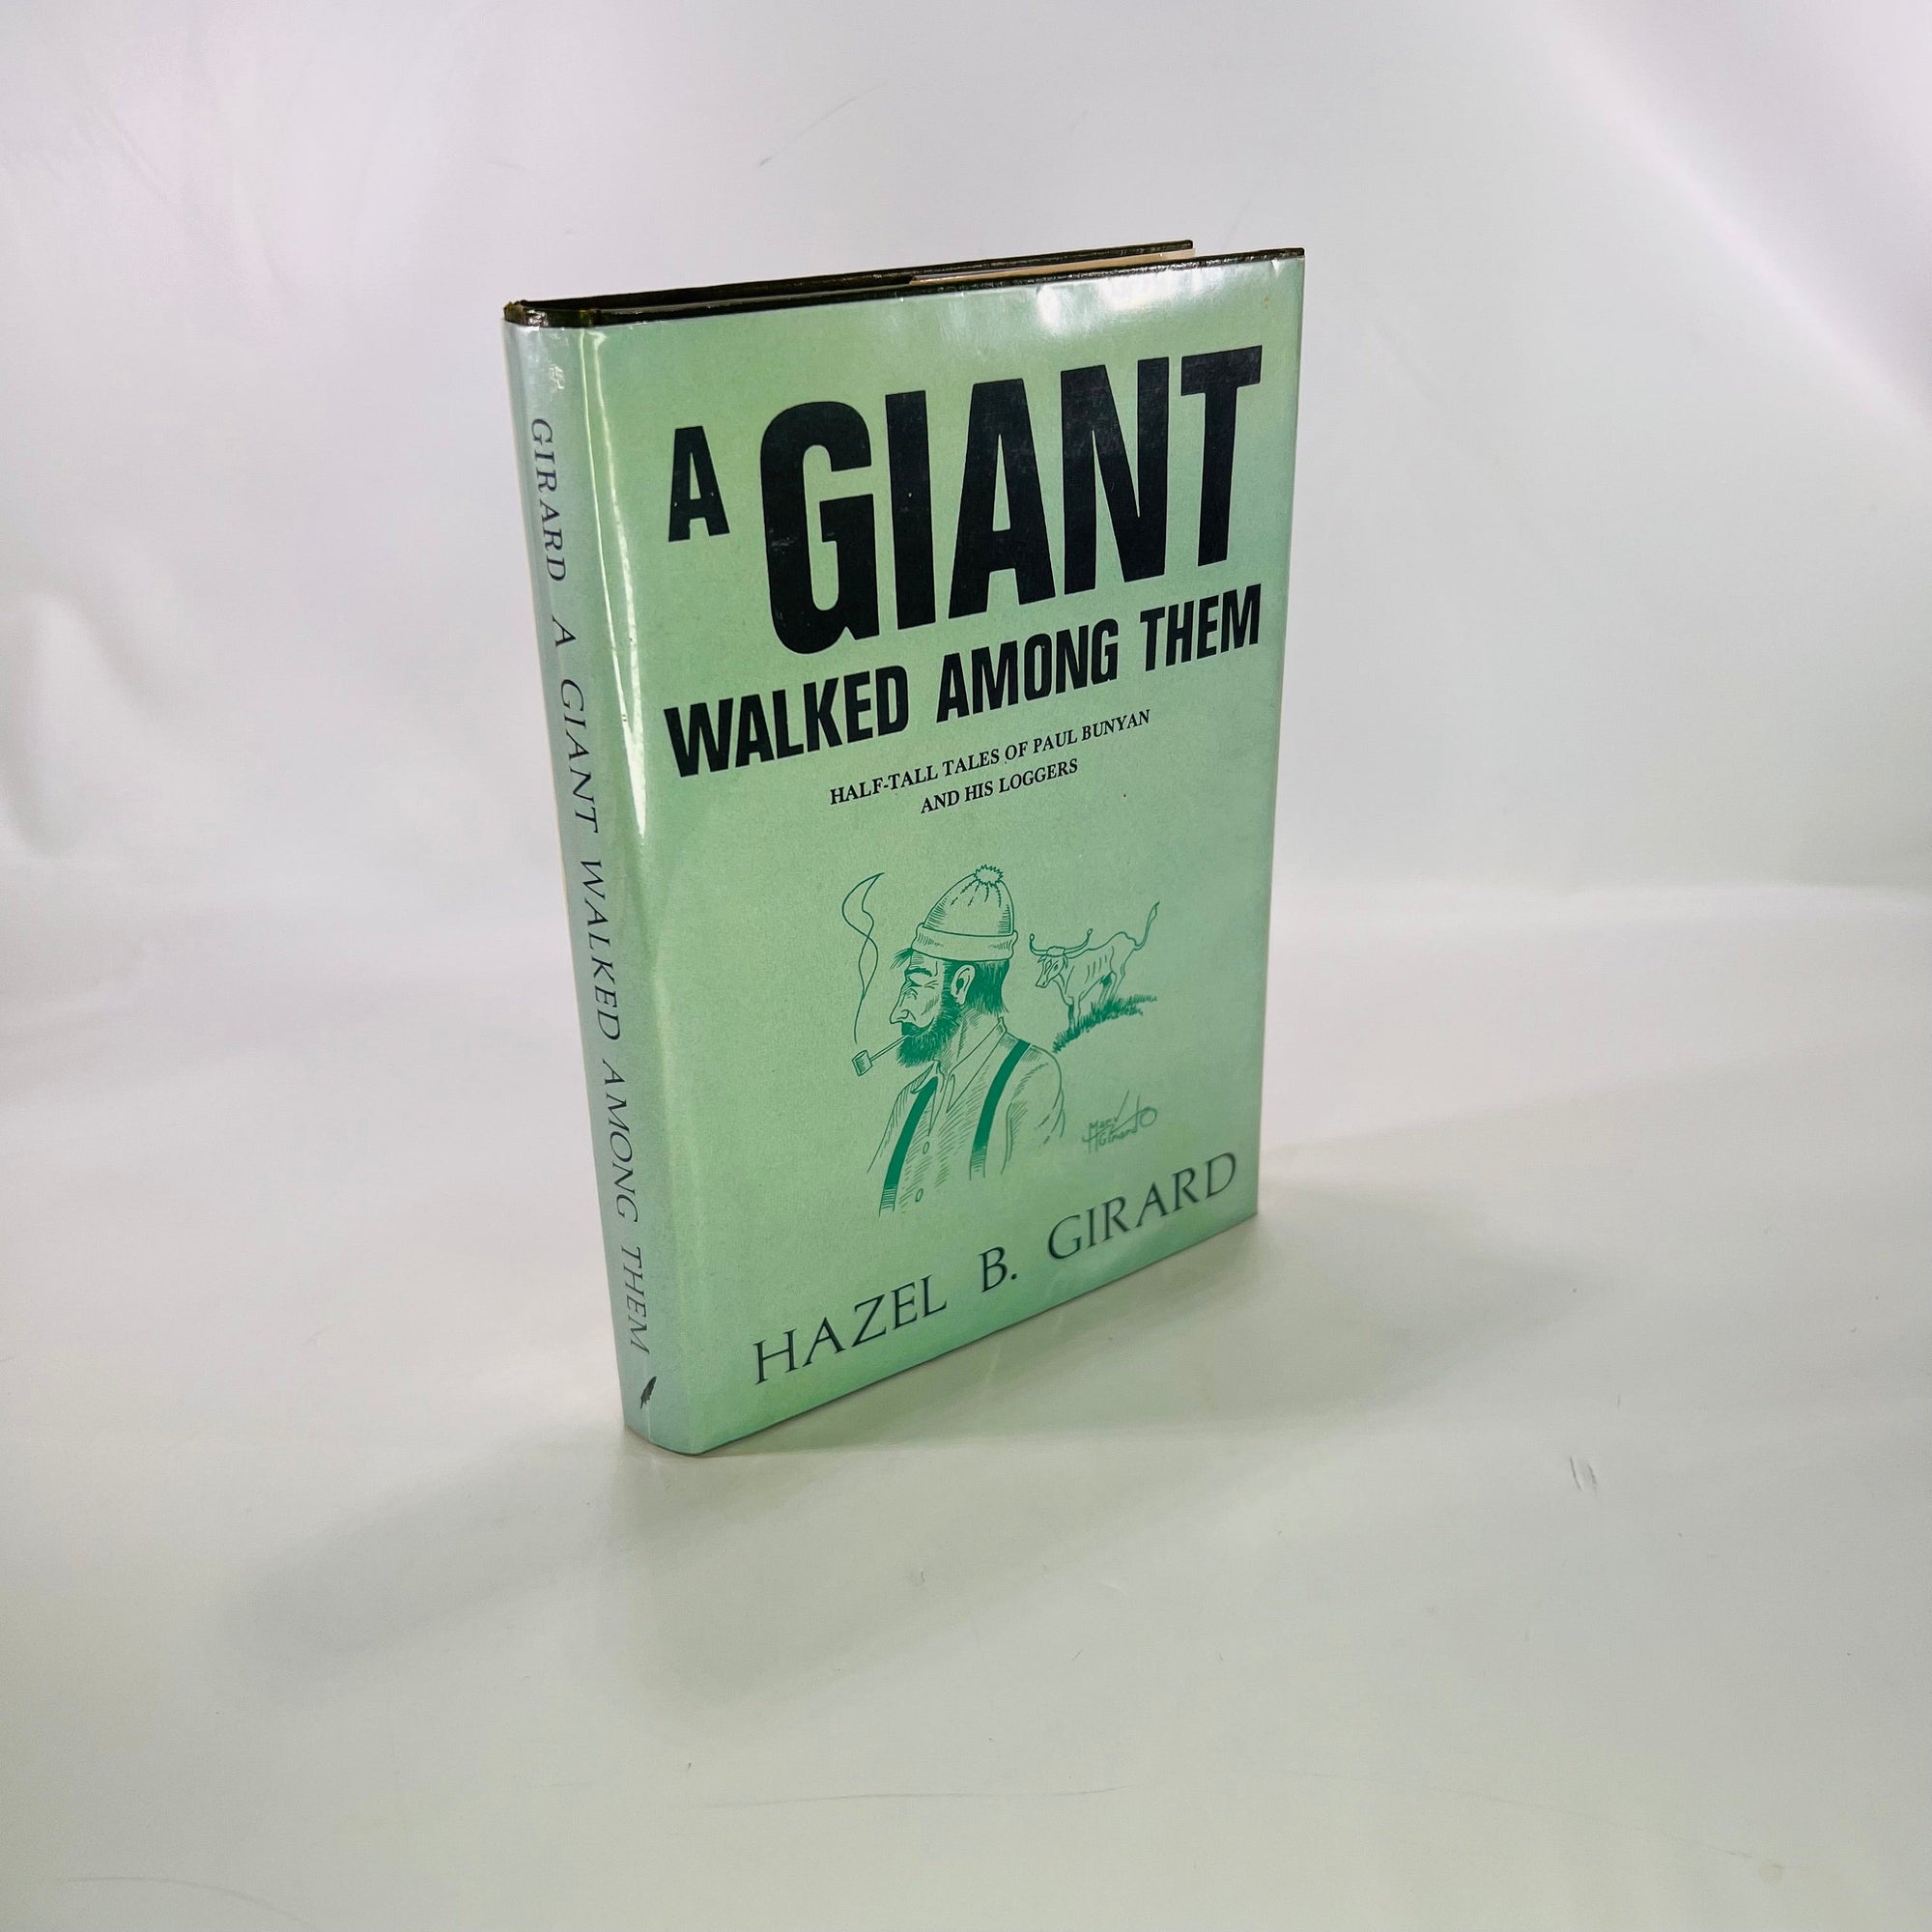 A Giant Walked Among Them Half-Tall Tales of Paul Bunyan & his Loggers by Hazel Girard 1977 Marshall Jones Company Vintage Book